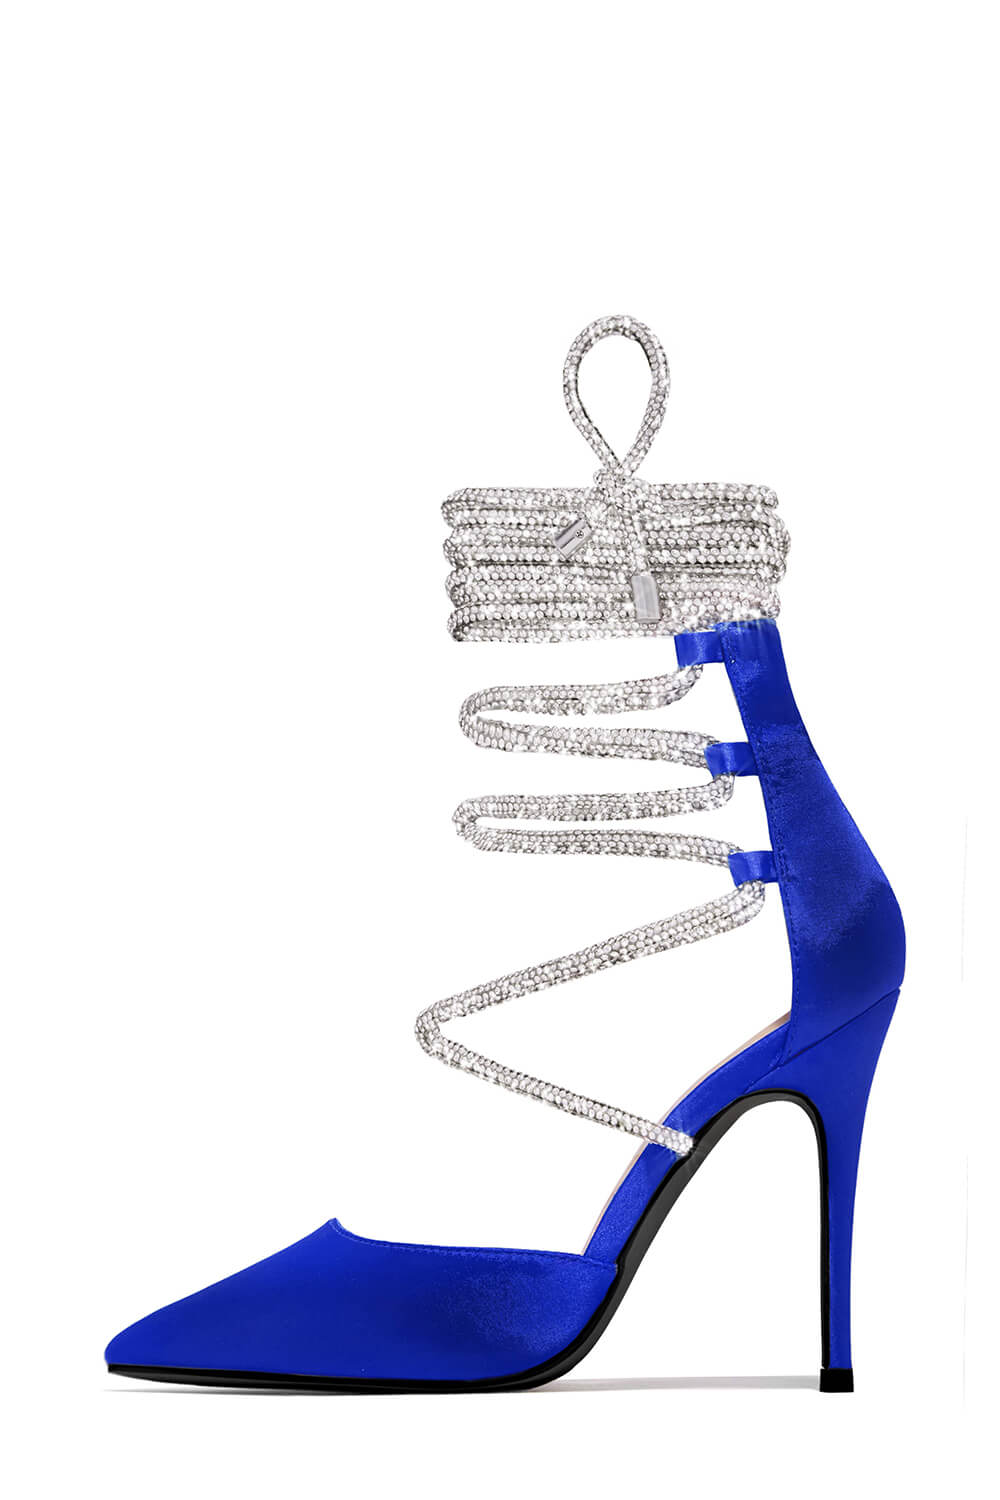 Royal Blue Lace Embellished Wedding Shoes for Bride - Etsy | Bride shoes,  Blue wedding shoes, Royal blue wedding shoes